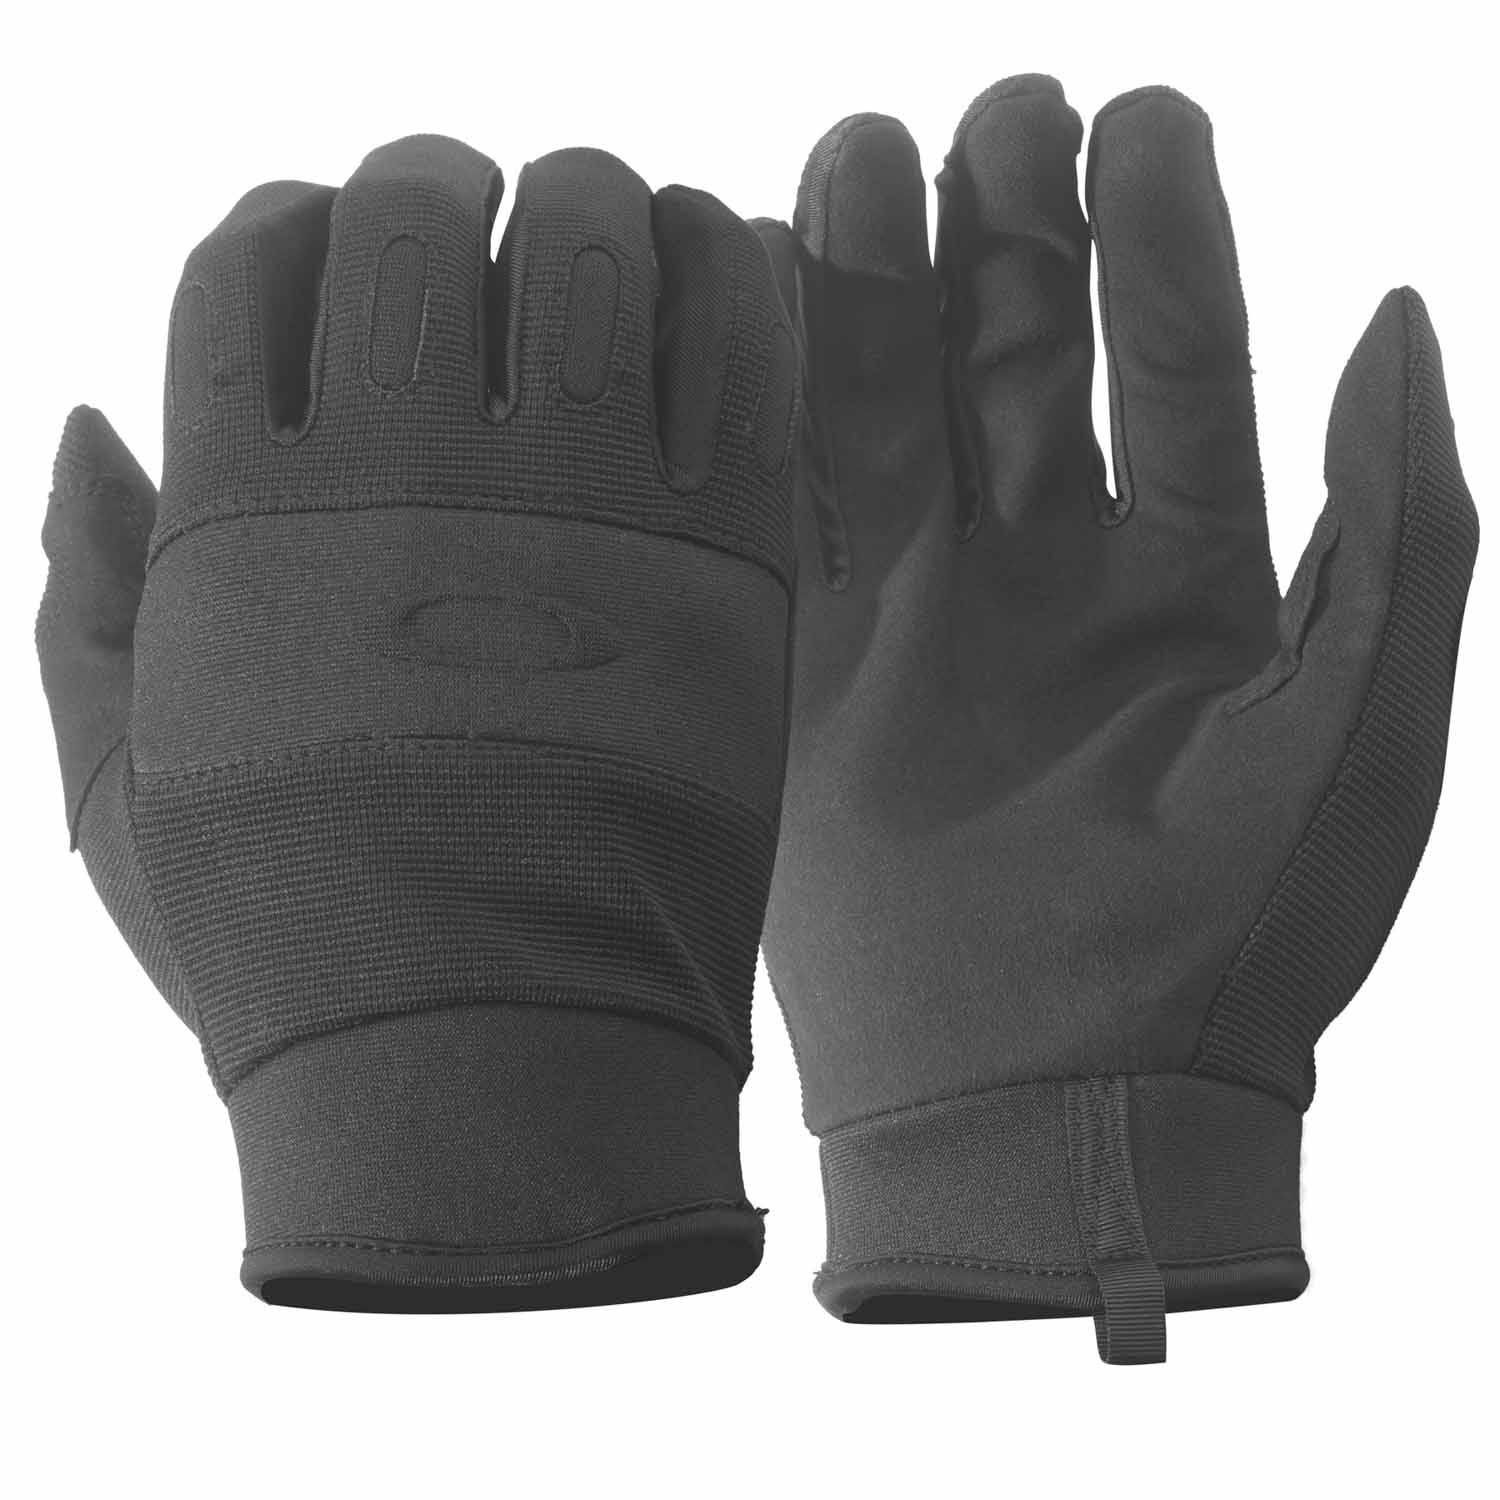 First Tactical Men’s Lightweight Patrol Glove SkinTight Goatskin Palm small size 